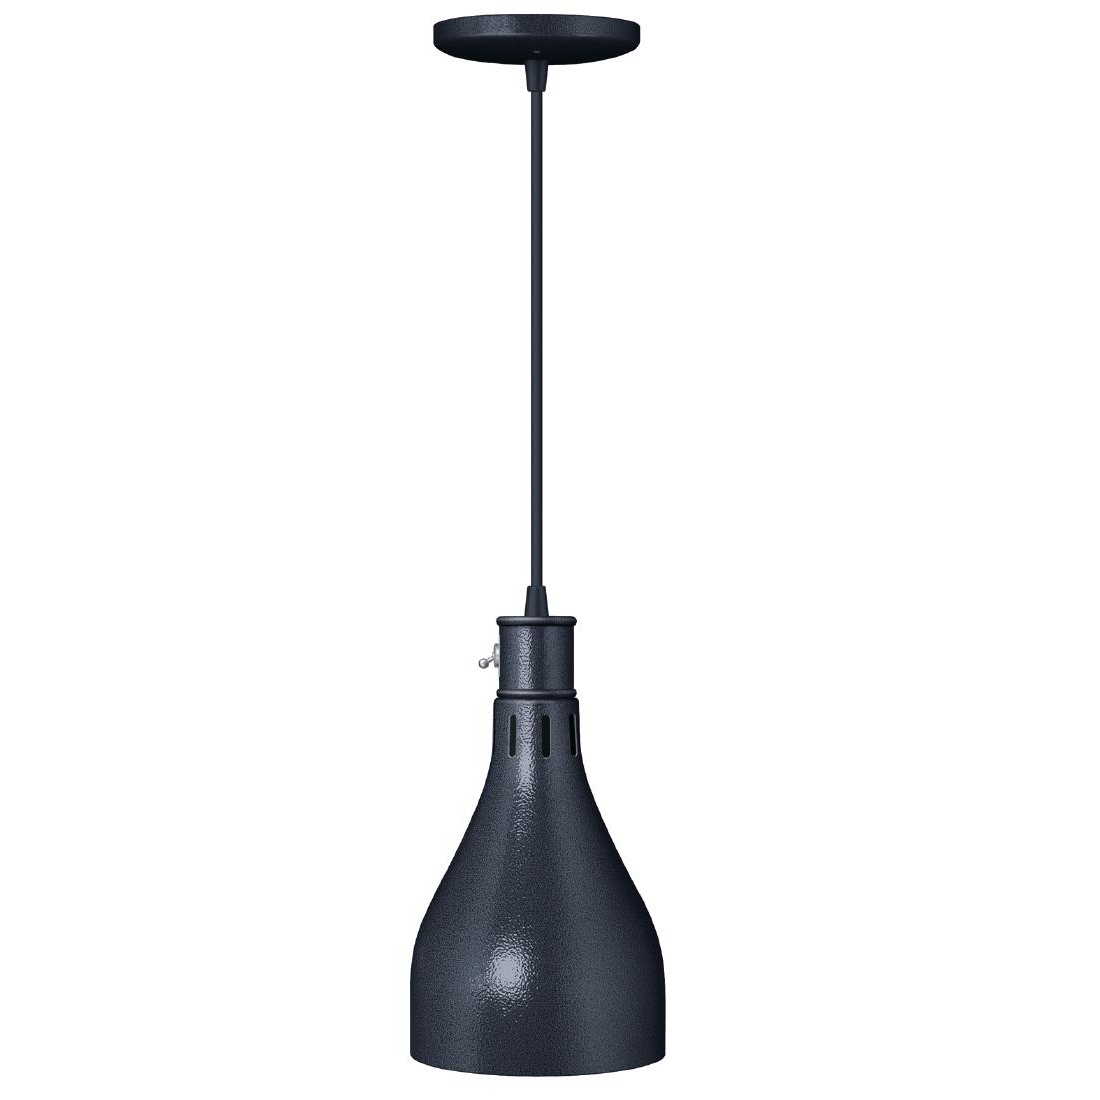 Hatco Heat Lamp Black Bell Shaped